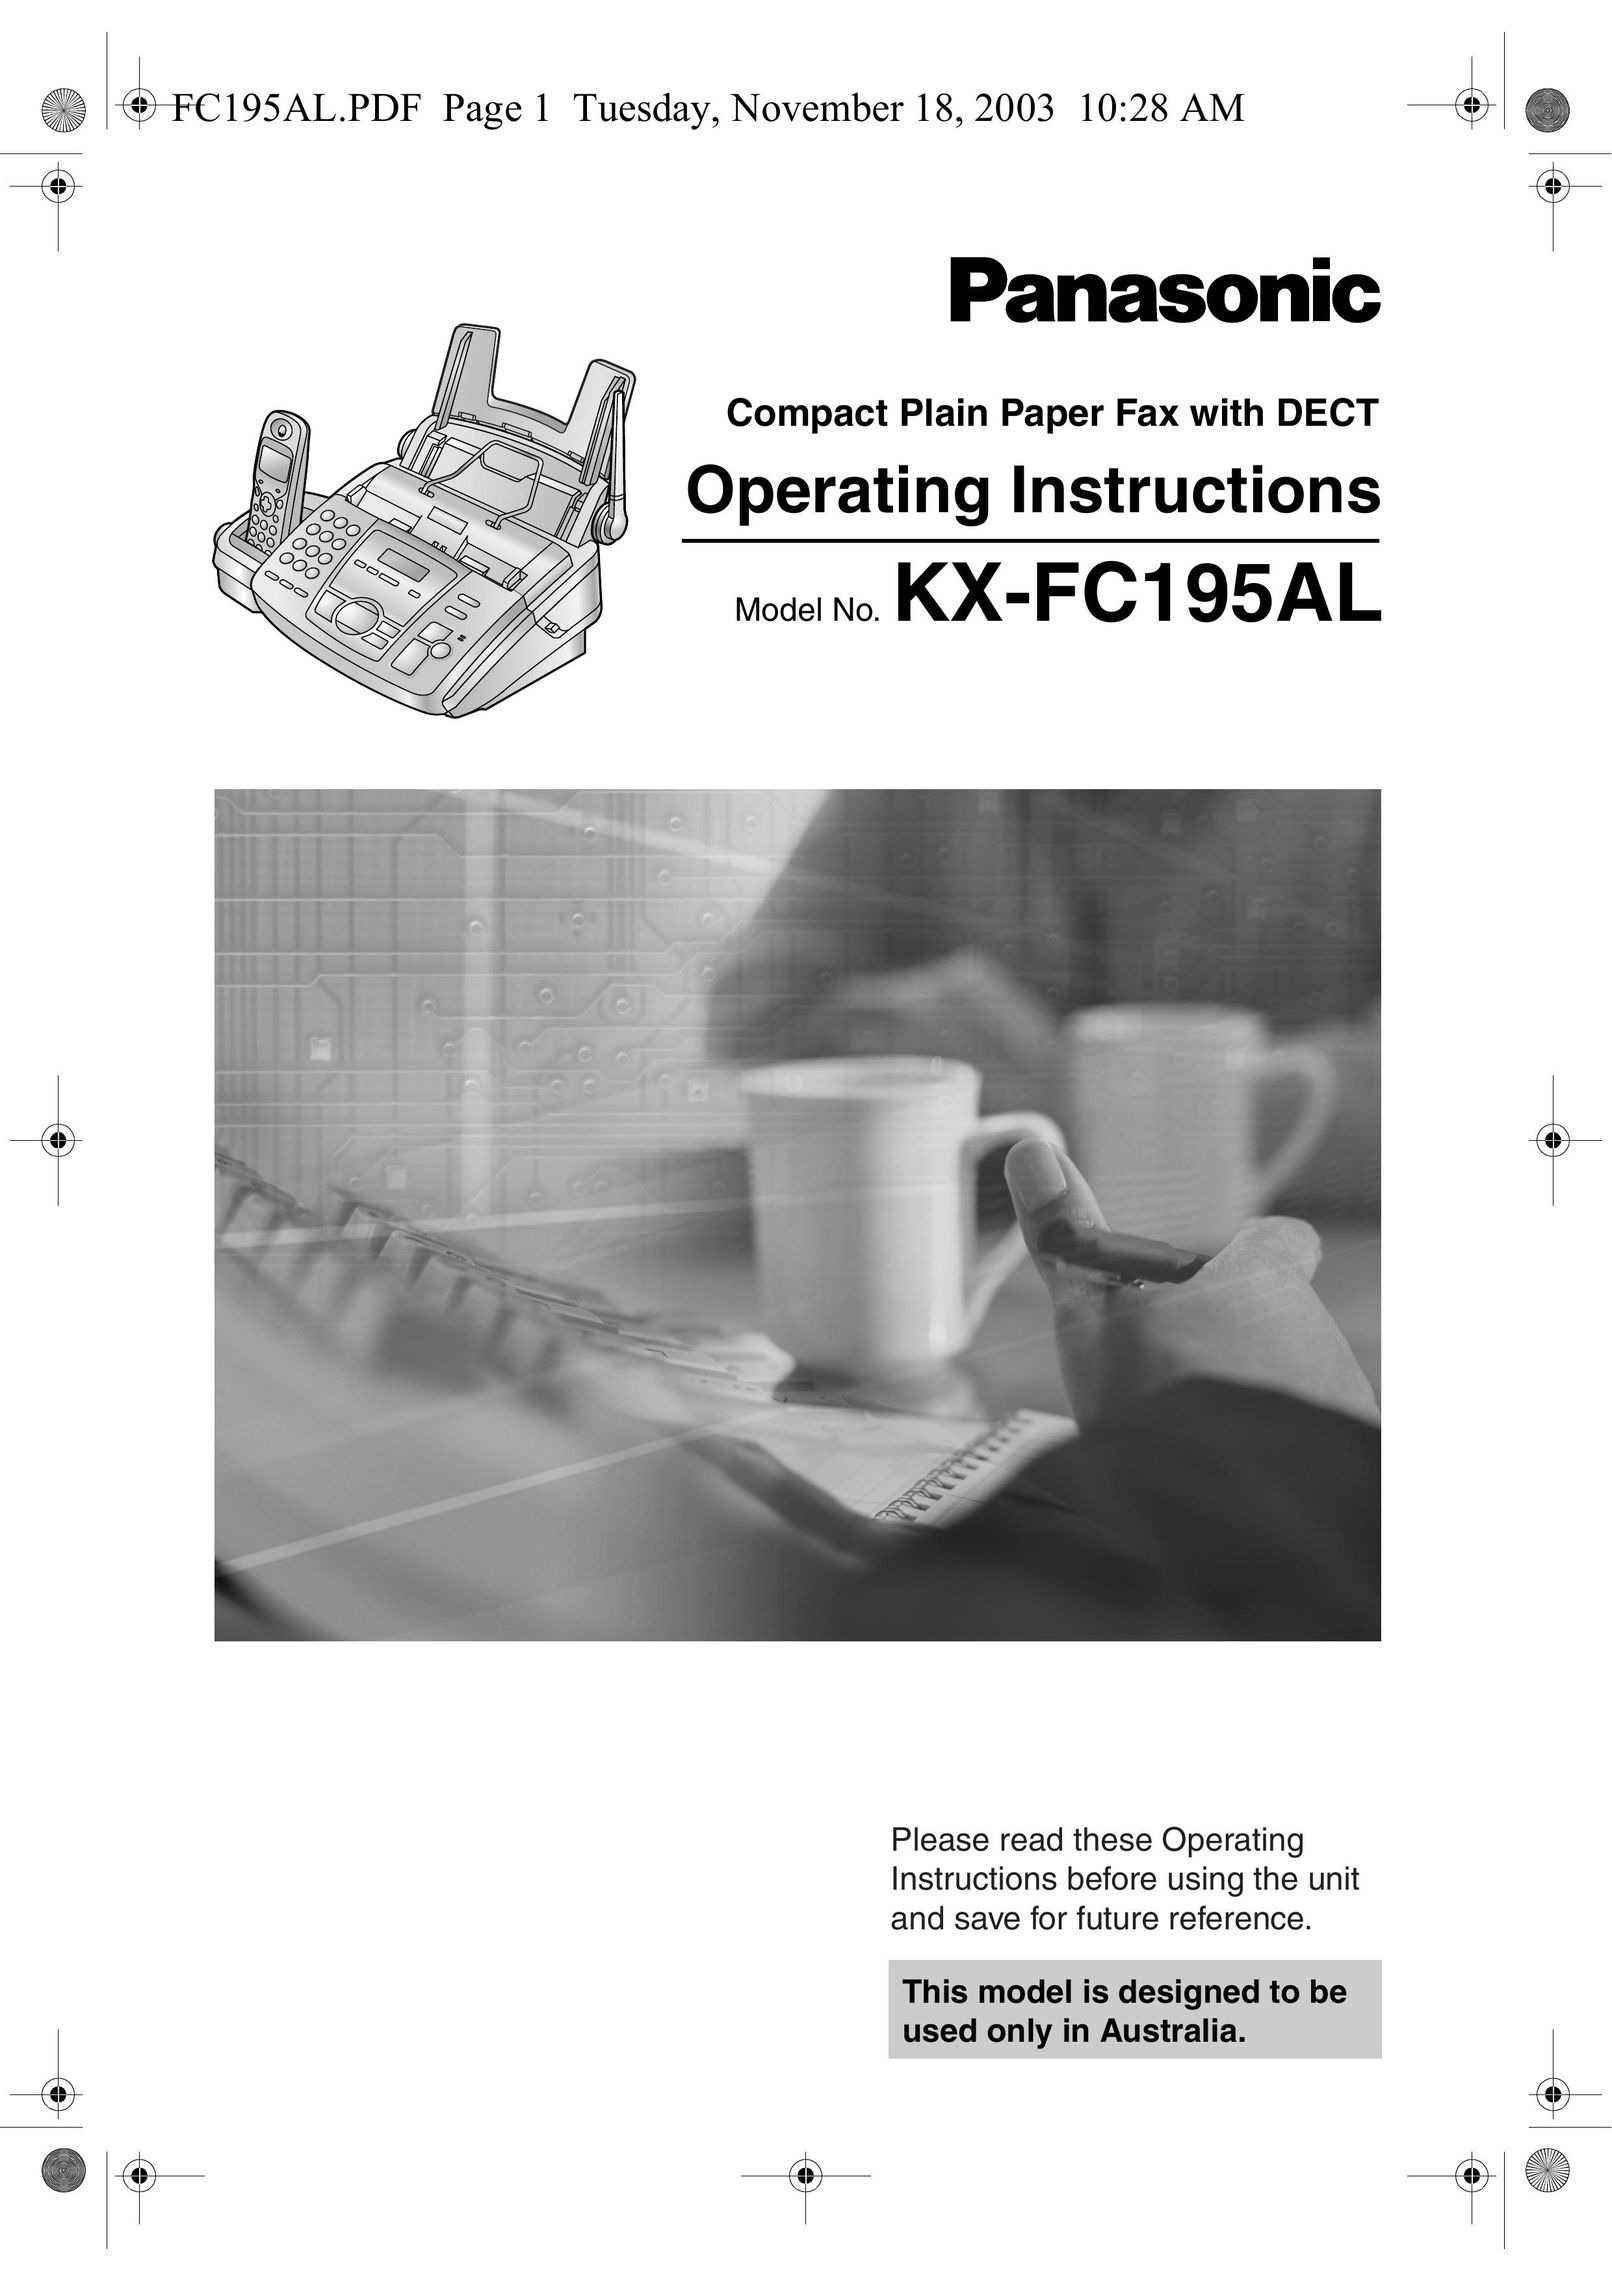 Panasonic KX-FC195AL Fax Machine User Manual